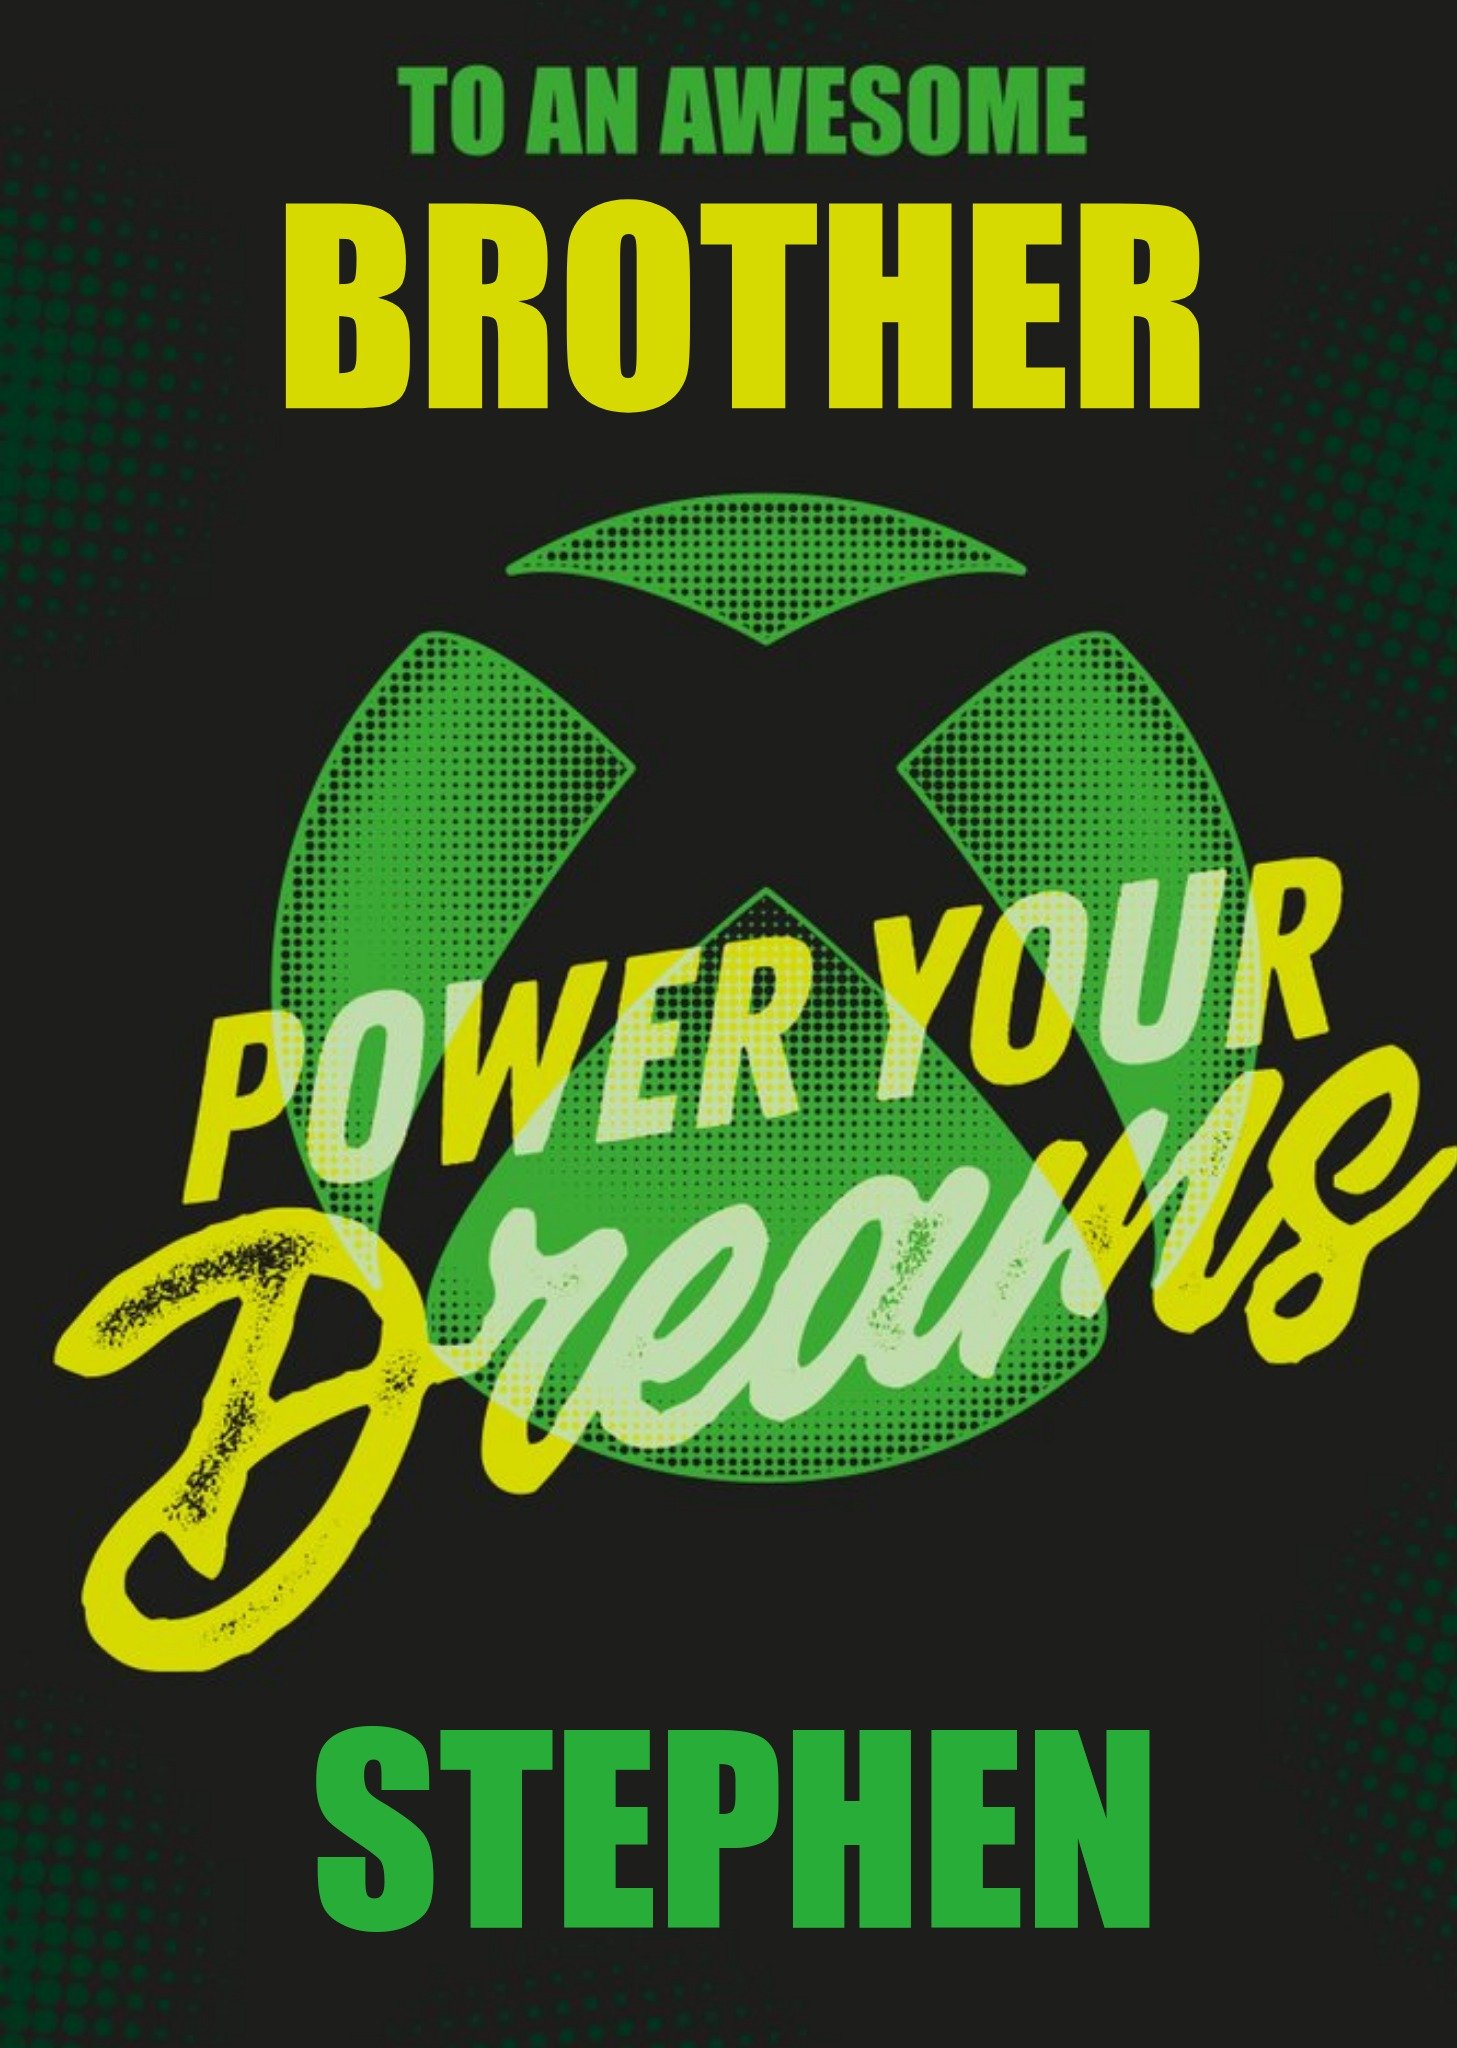 Moonpig Xbox Power Your Dreams Birthday Card Ecard